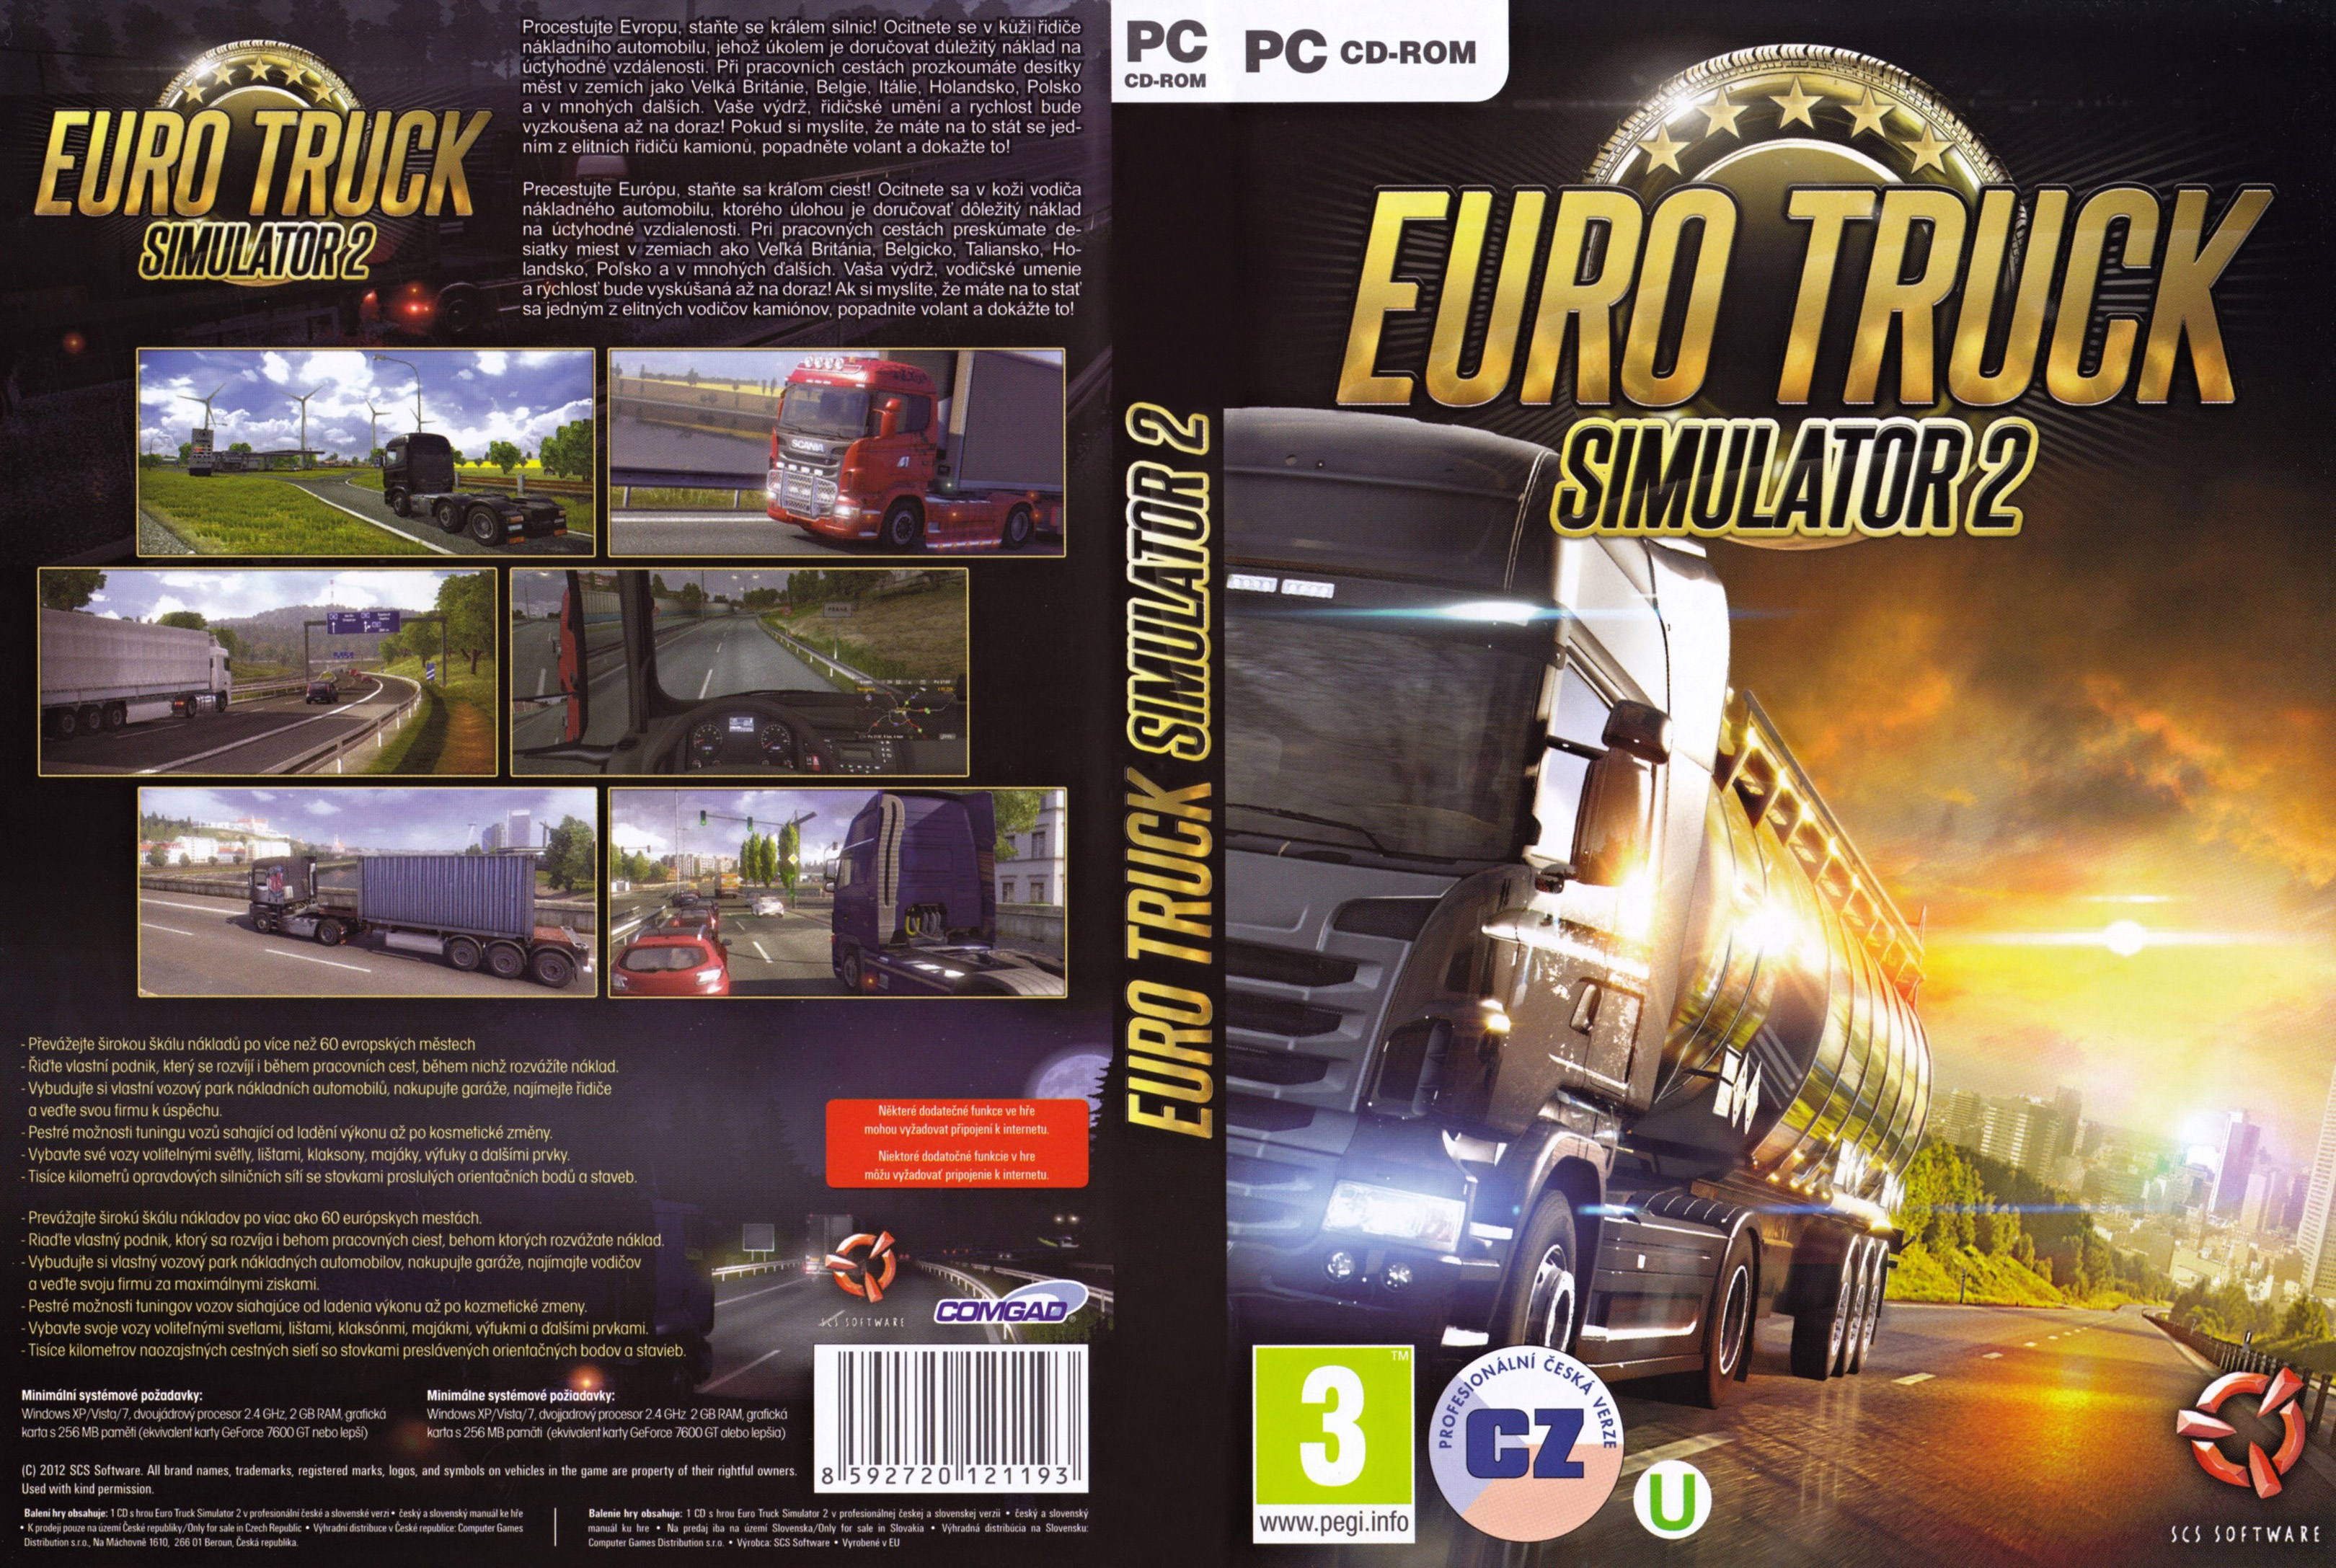 Eurotrack